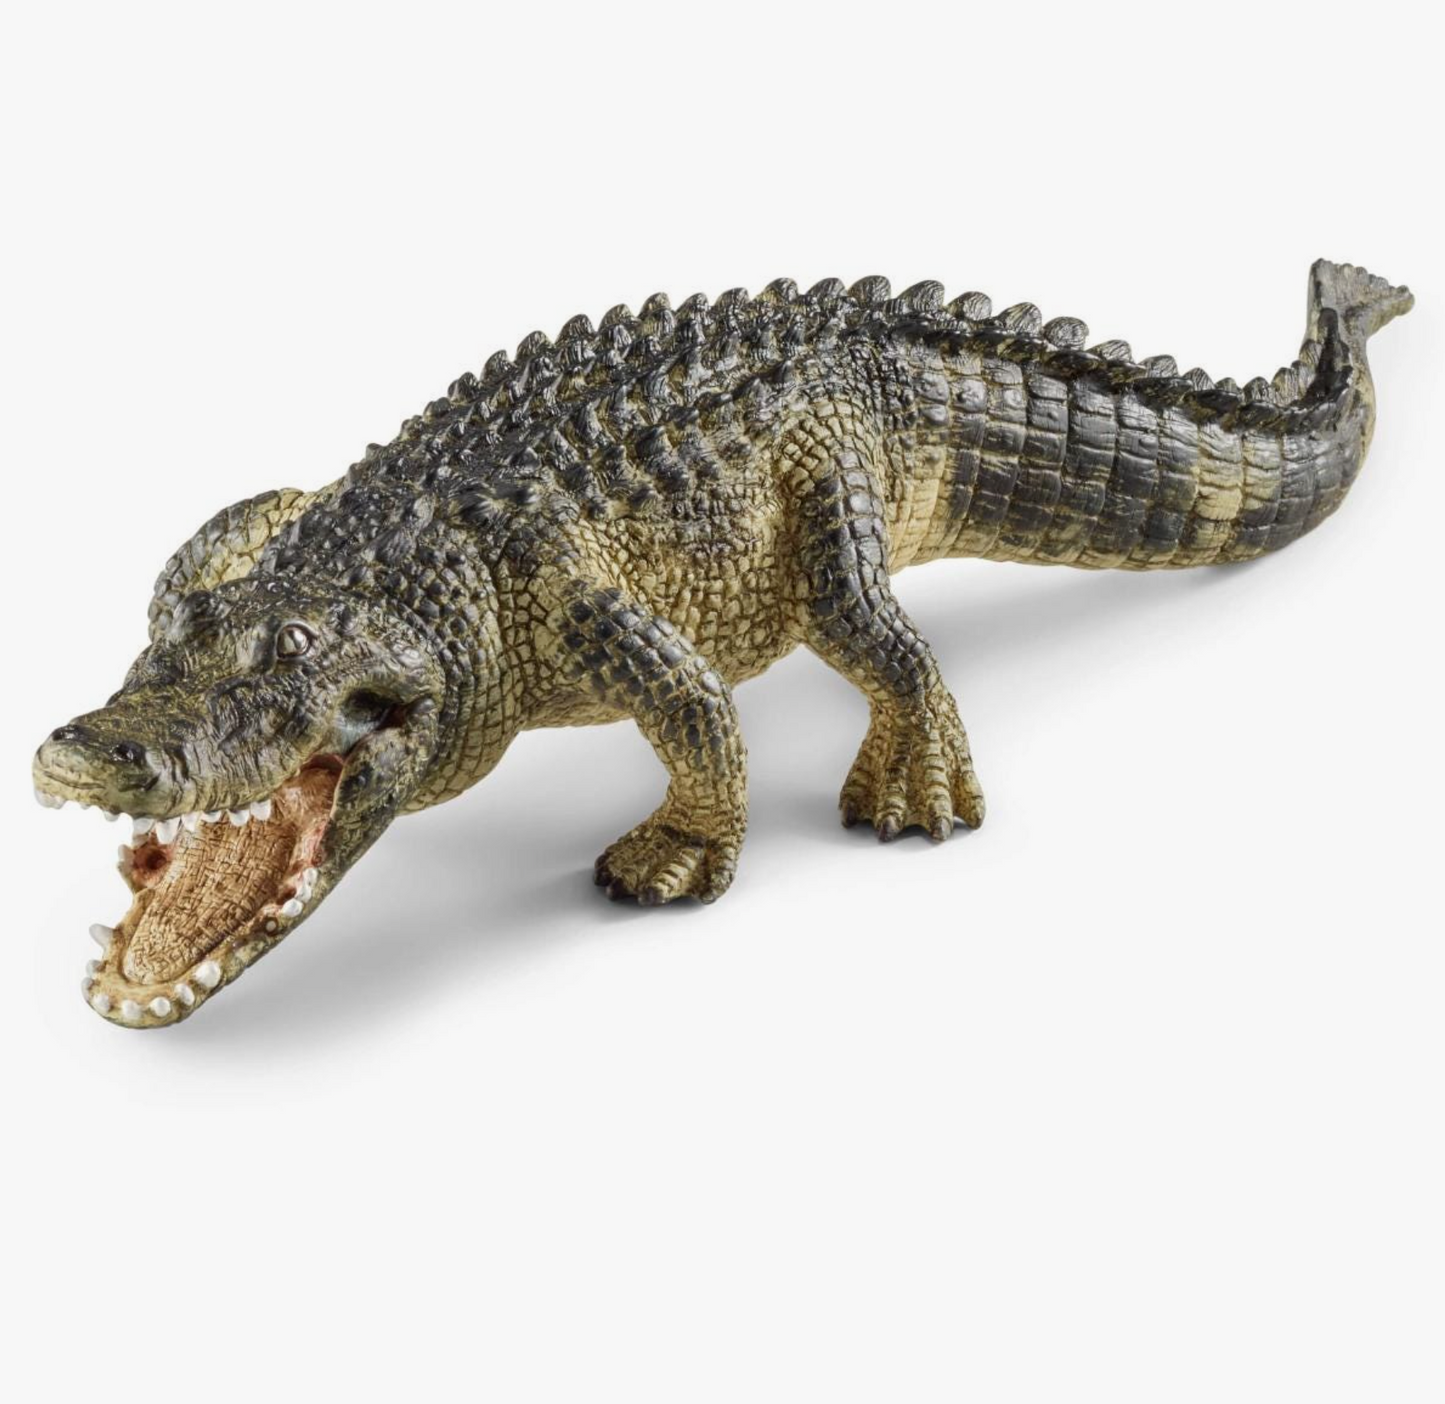 Alligator Animal Toy